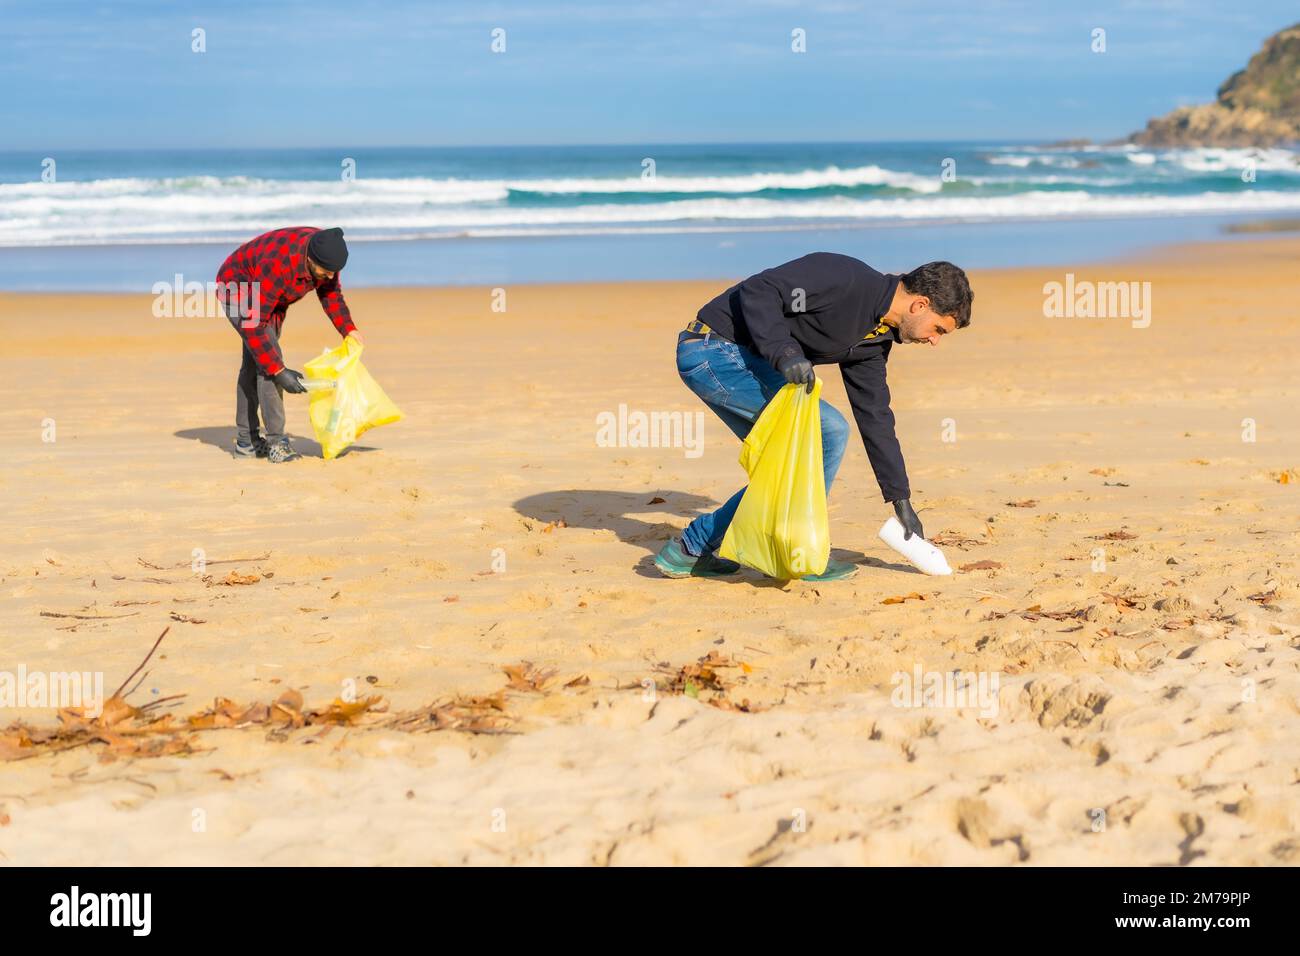 Freiwillige sammeln Plastik aus dem Sand am Strand. Ökologiekonzept, Meeresverschmutzung Stockfoto